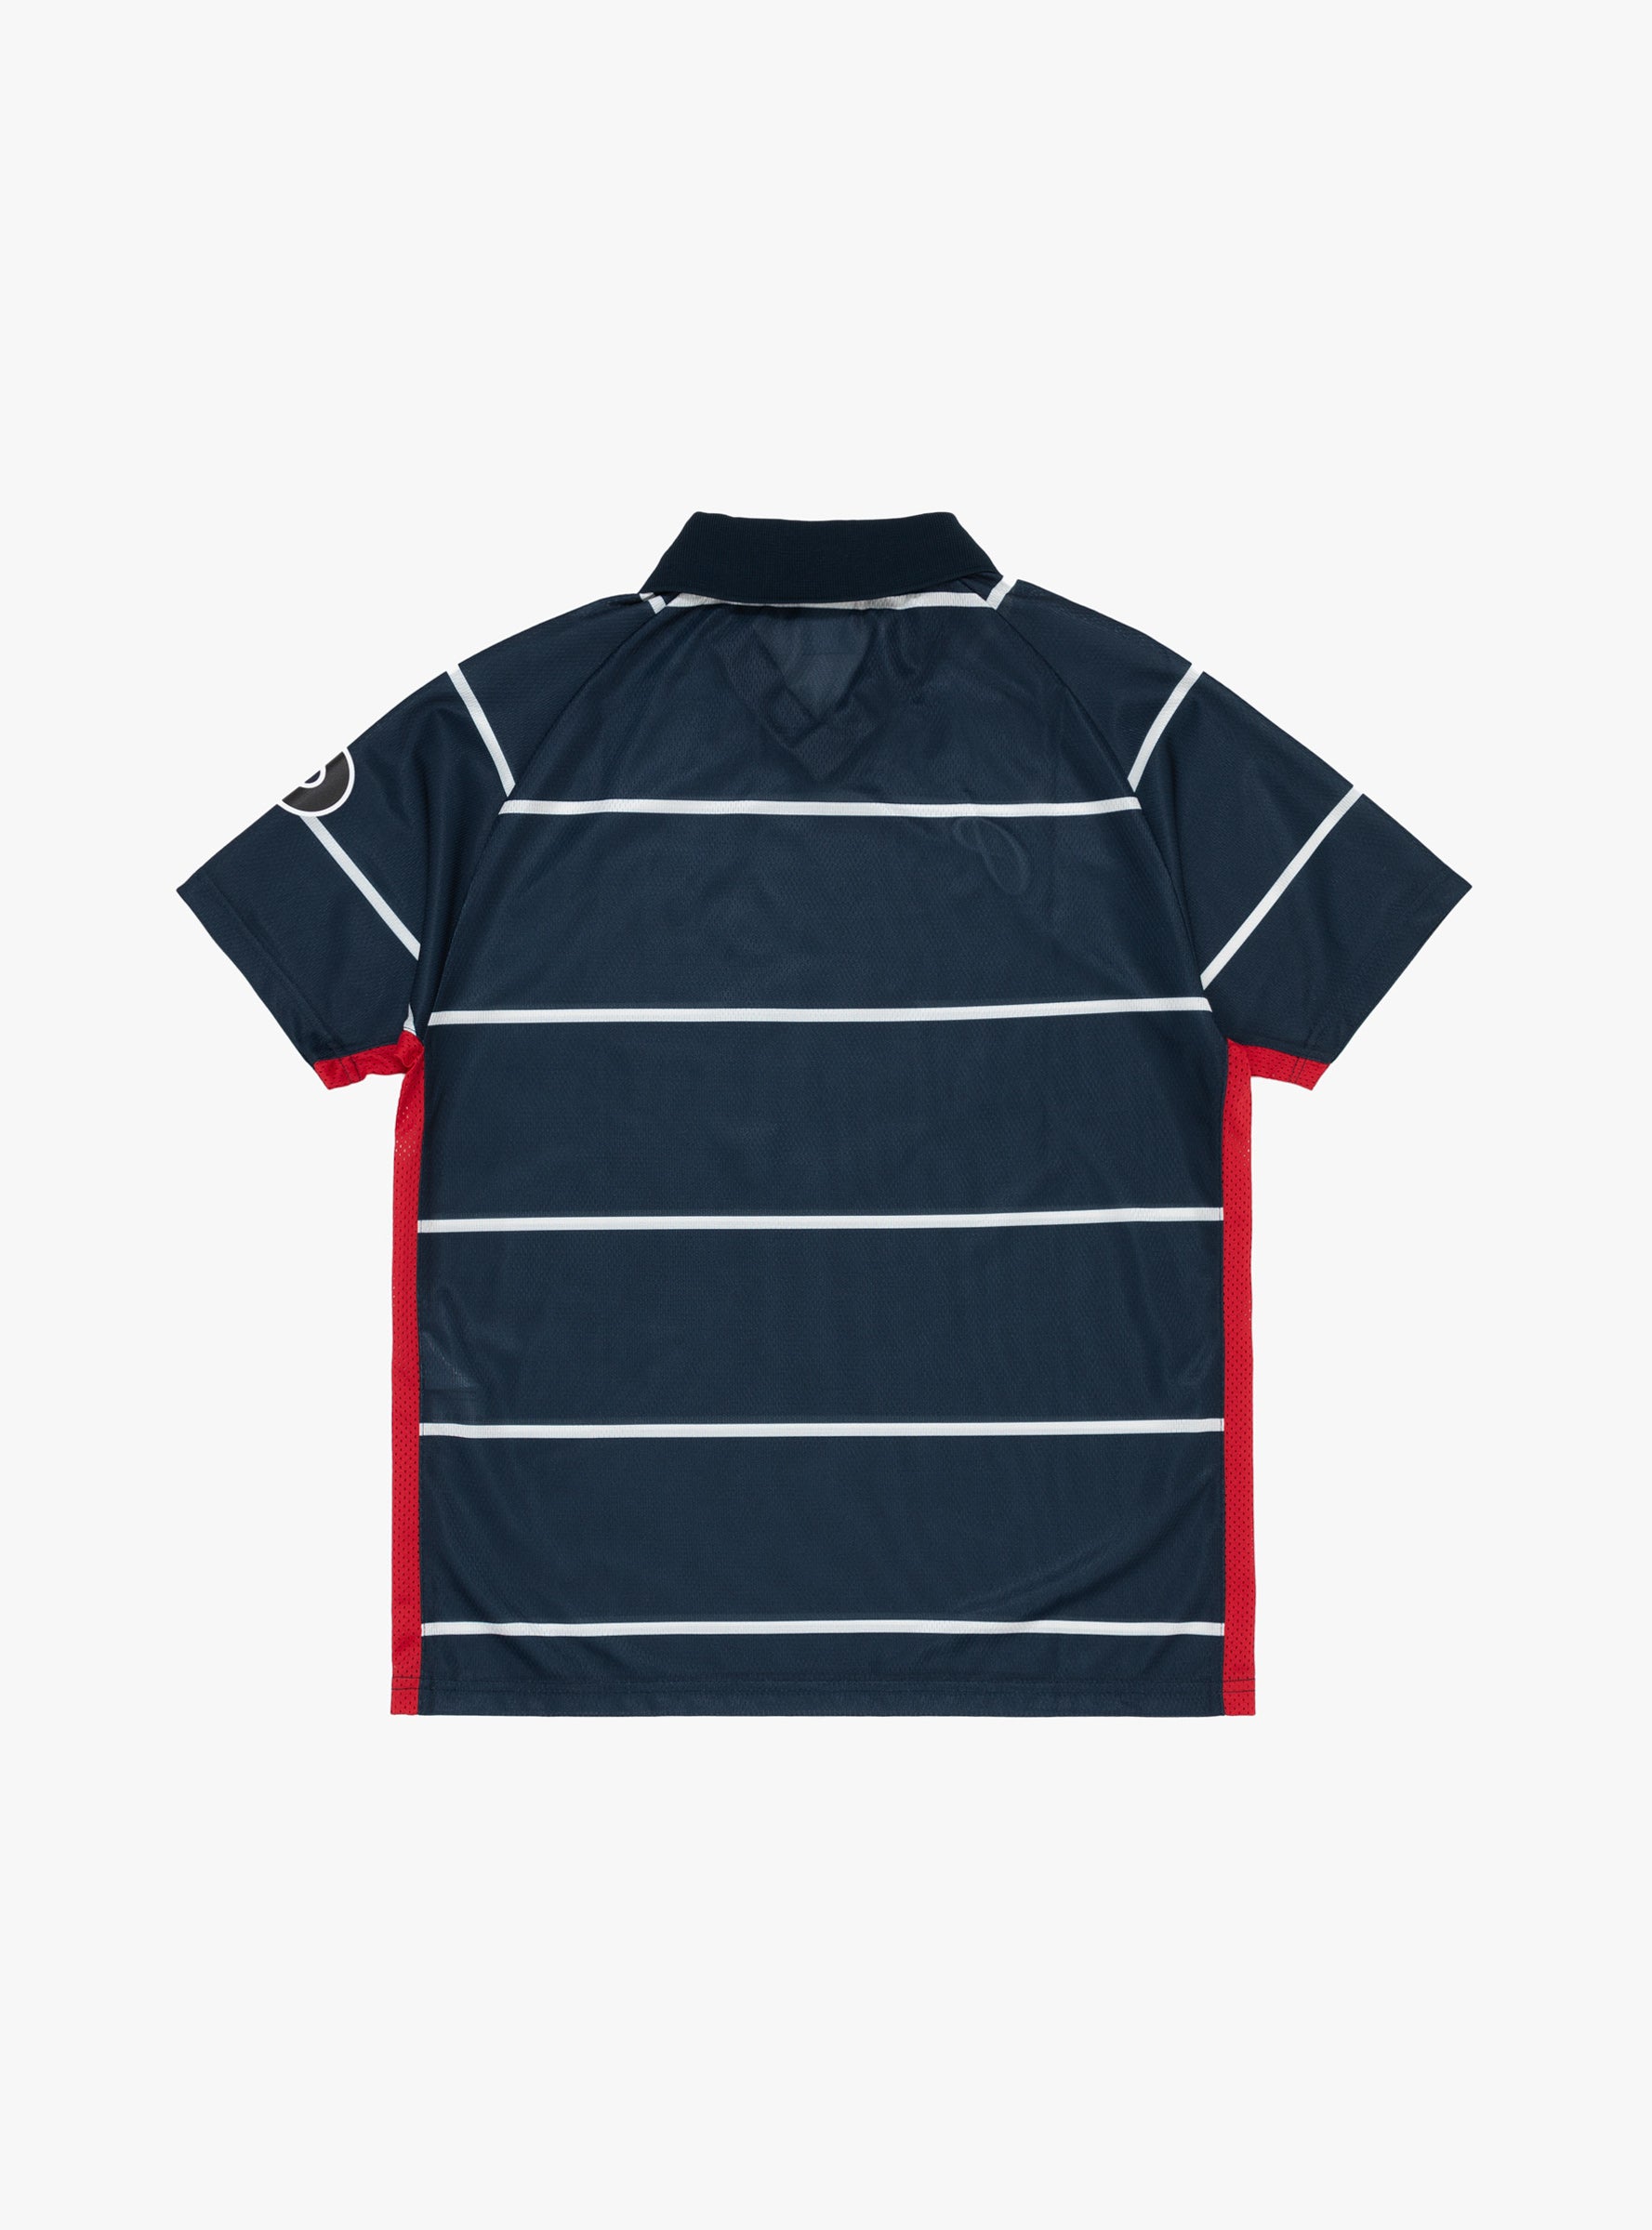 Pop Trading Company Pop Trading Company Striped Sportif T-Shirt Navy - Size: Large